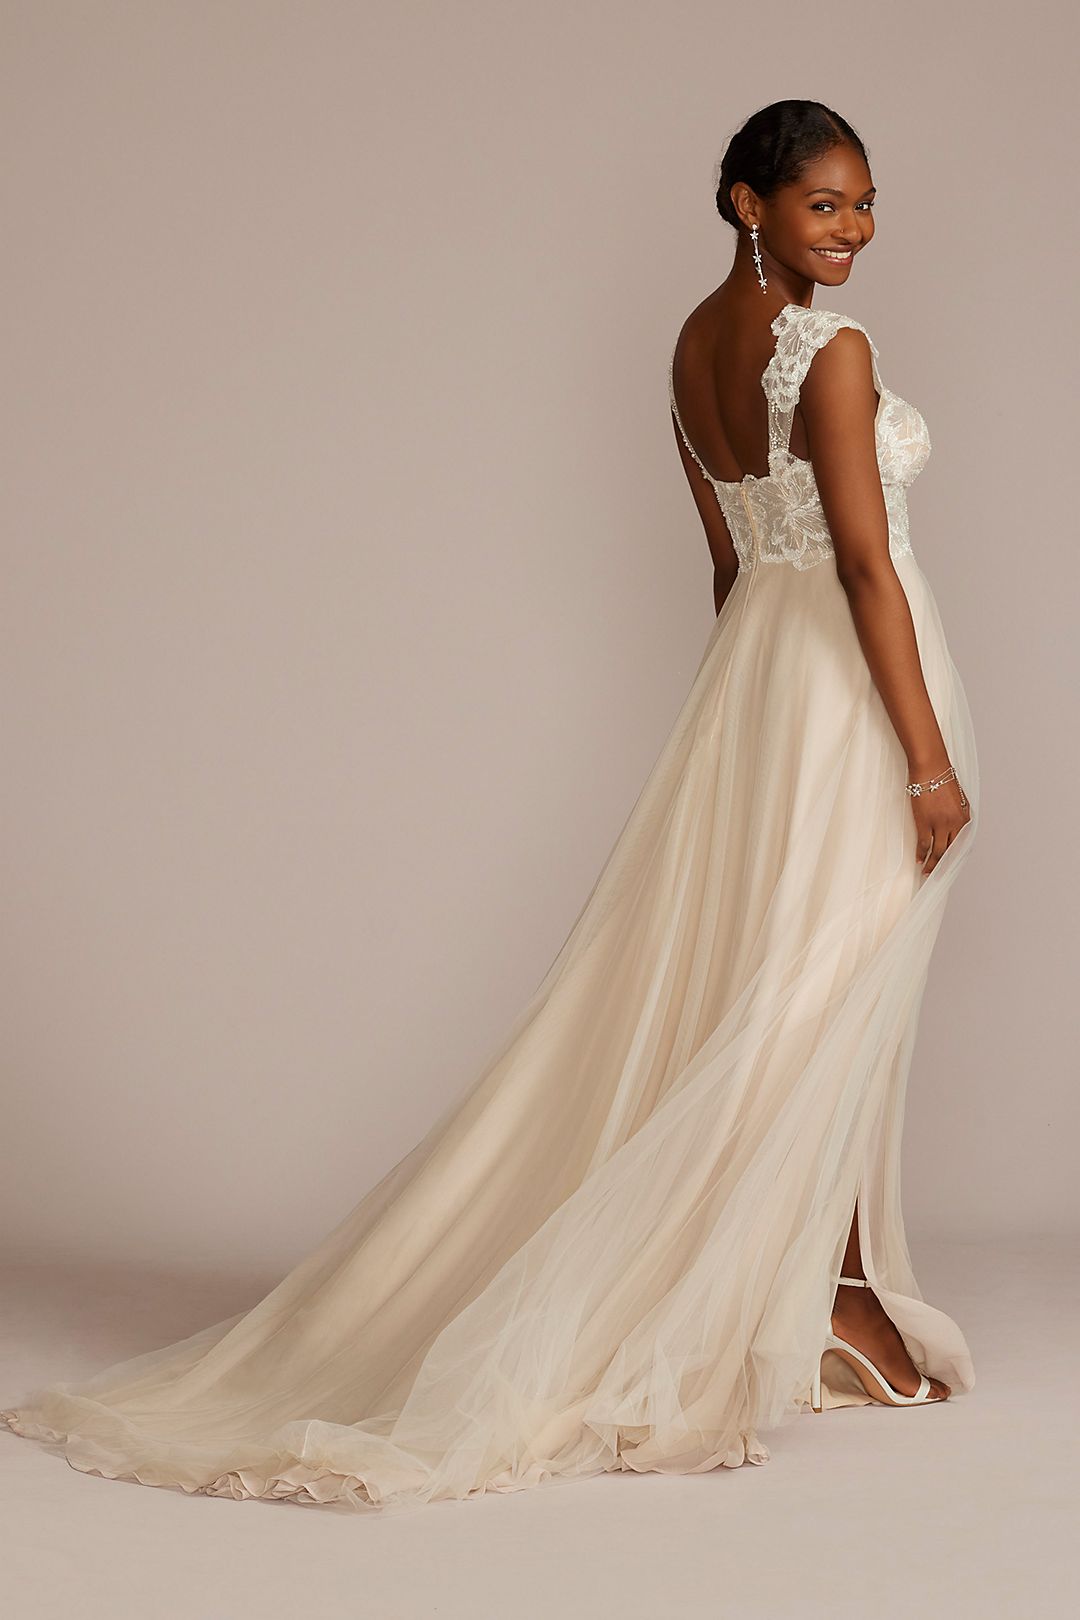 Floral Applique Cap Sleeve Wedding Gown Image 2